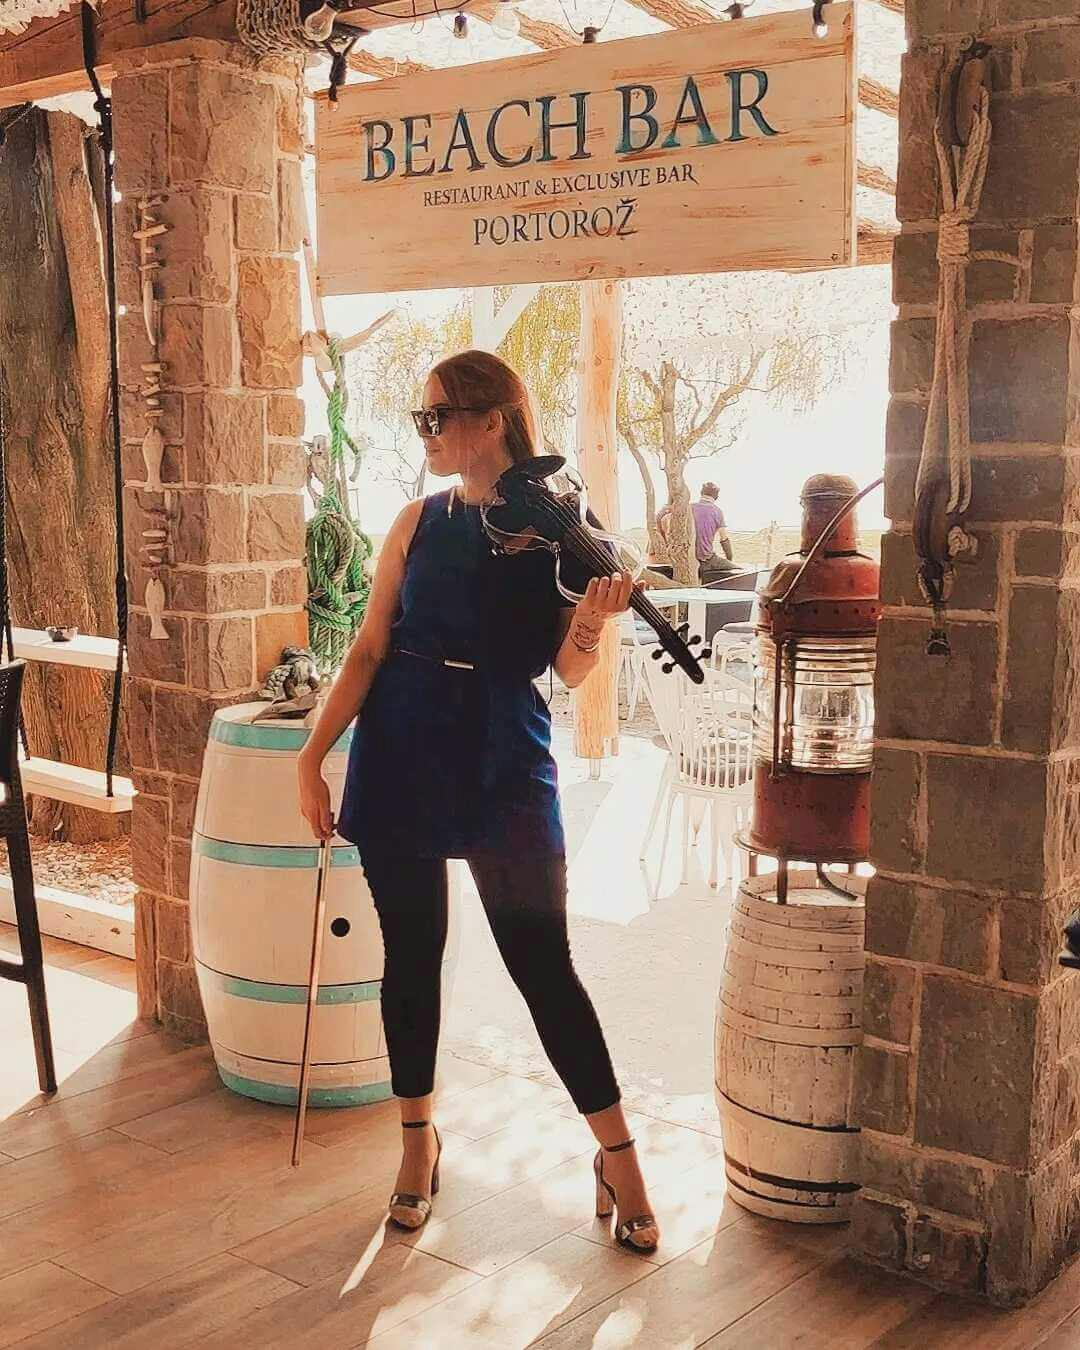 she is posing with violin in Beach bar Portorož